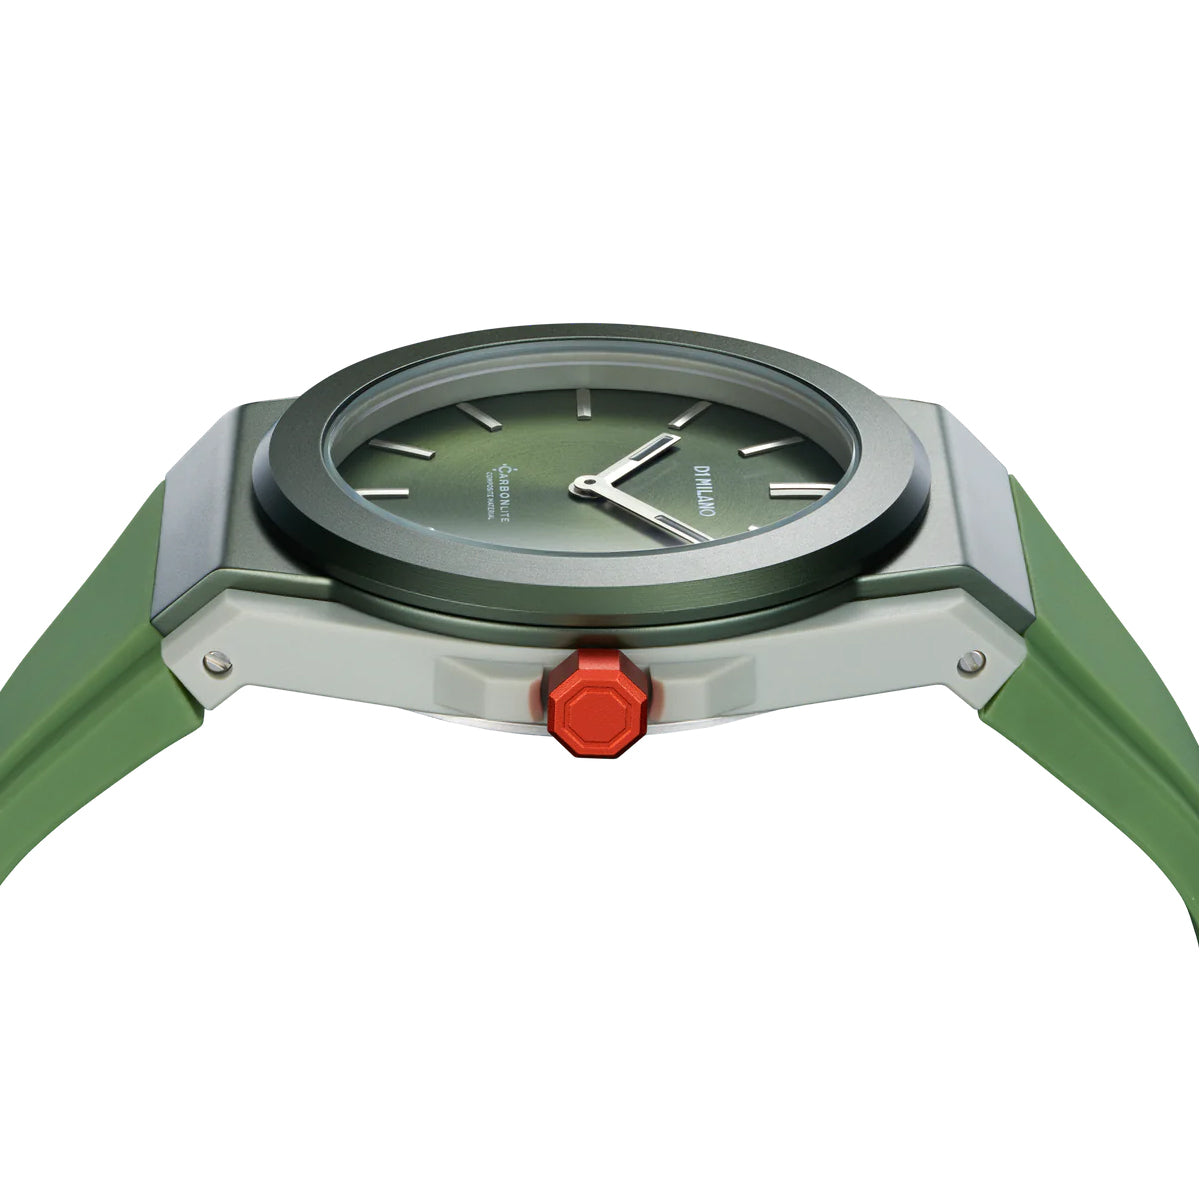 Carbonlite Unisex Green Quartz Analog Watch - 0716053753830